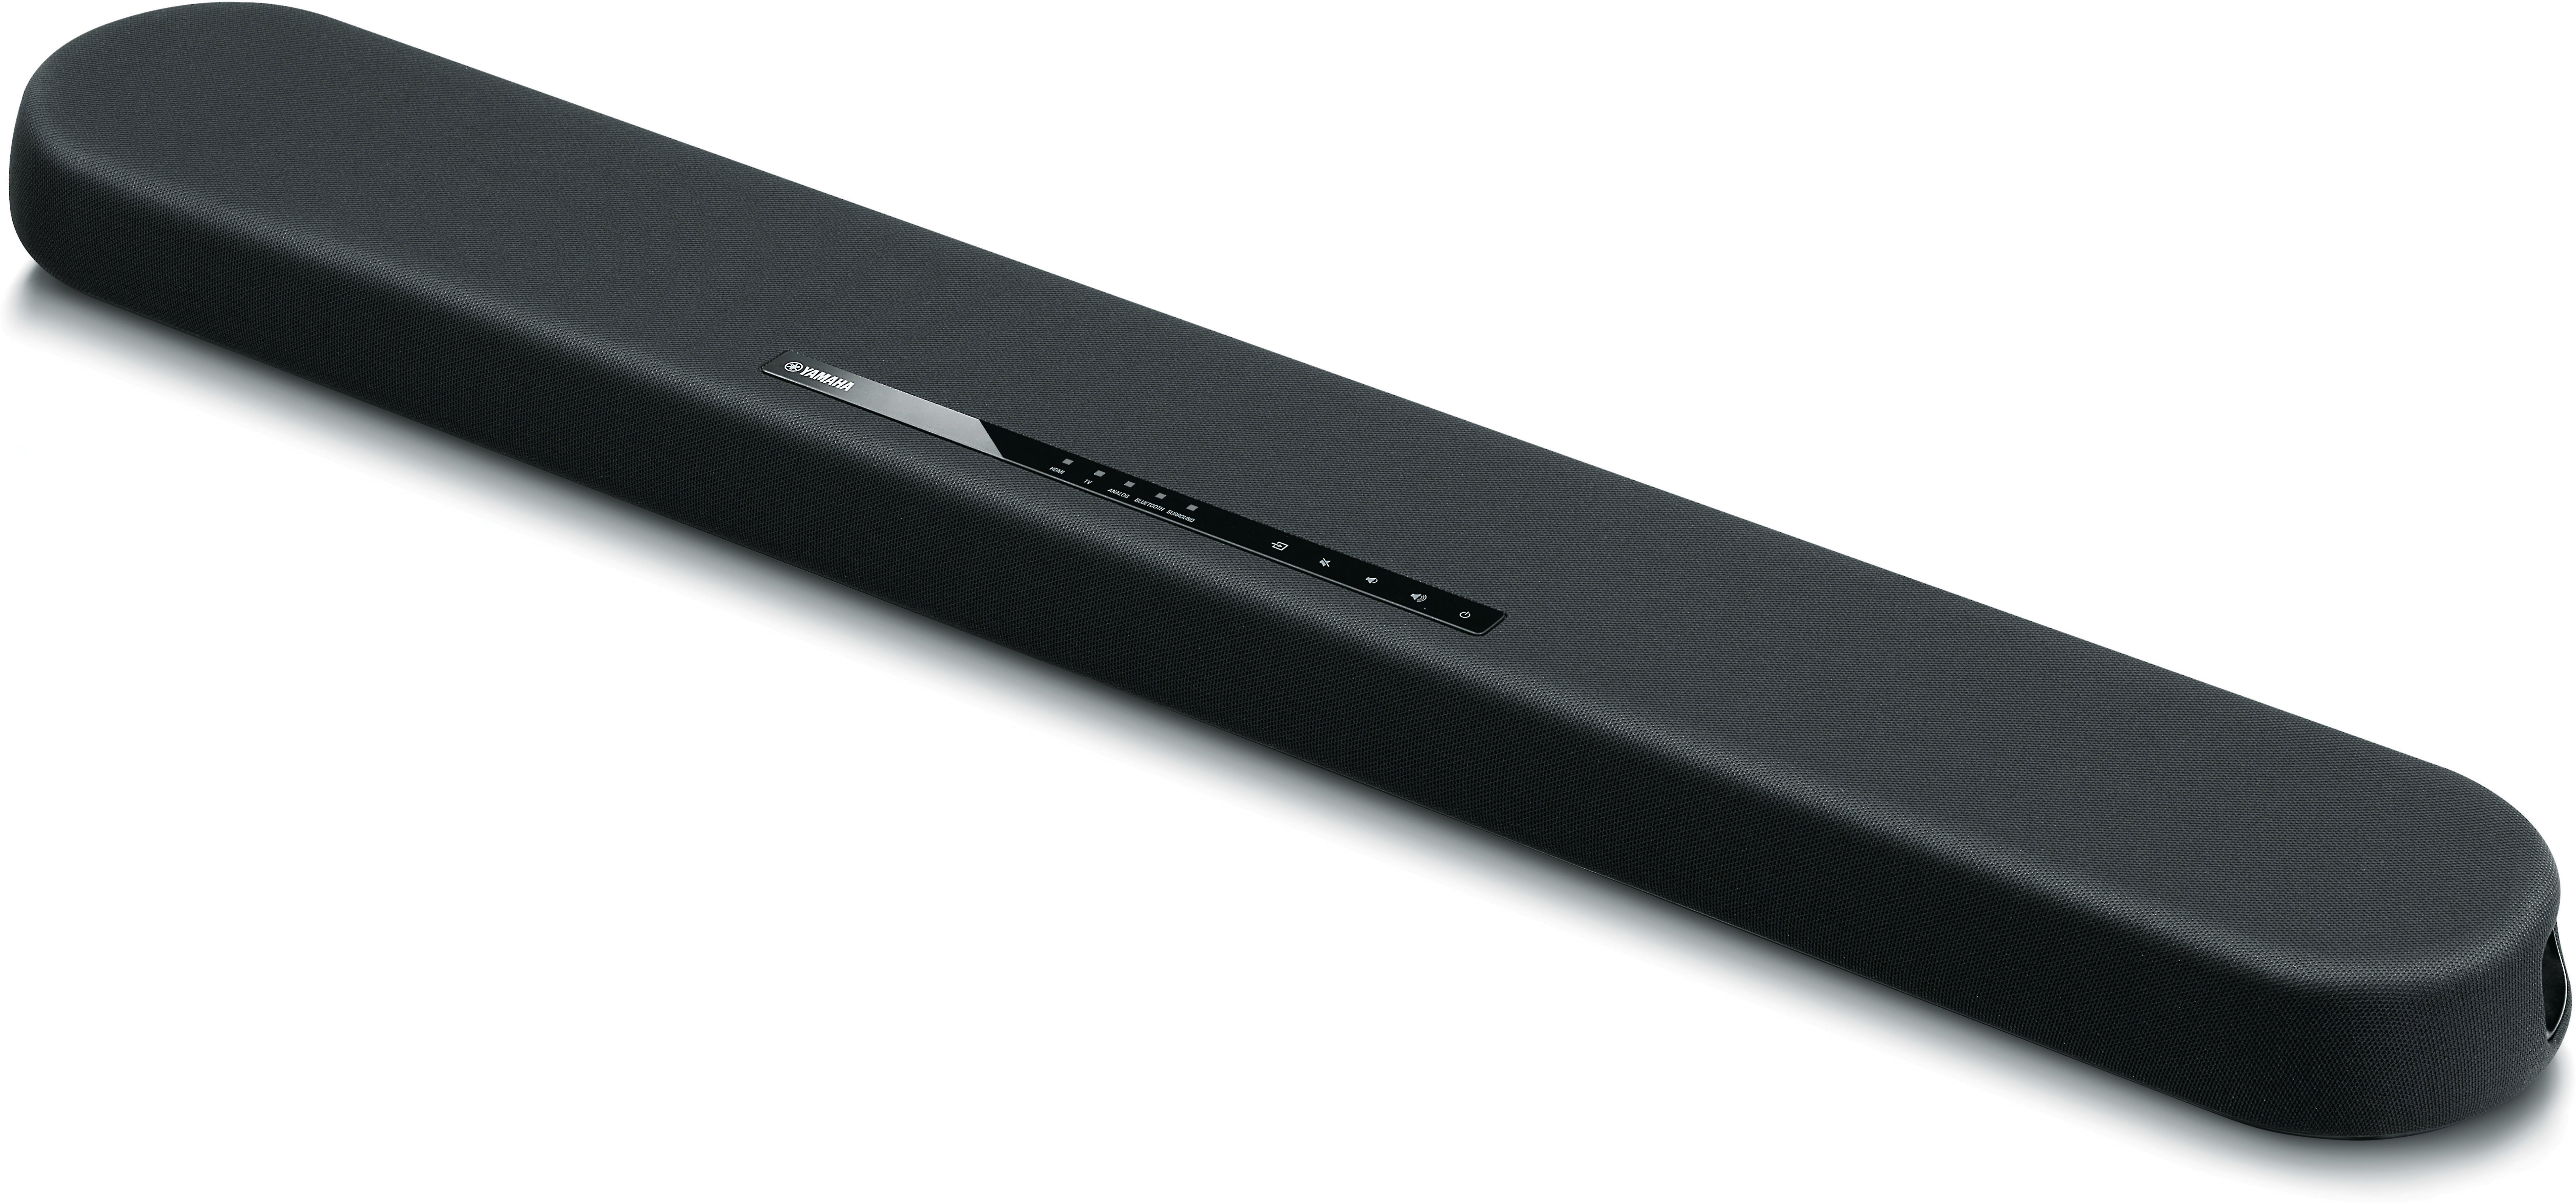 Customer Reviews: Yamaha YAS-108 Powered sound bar with built-in ...